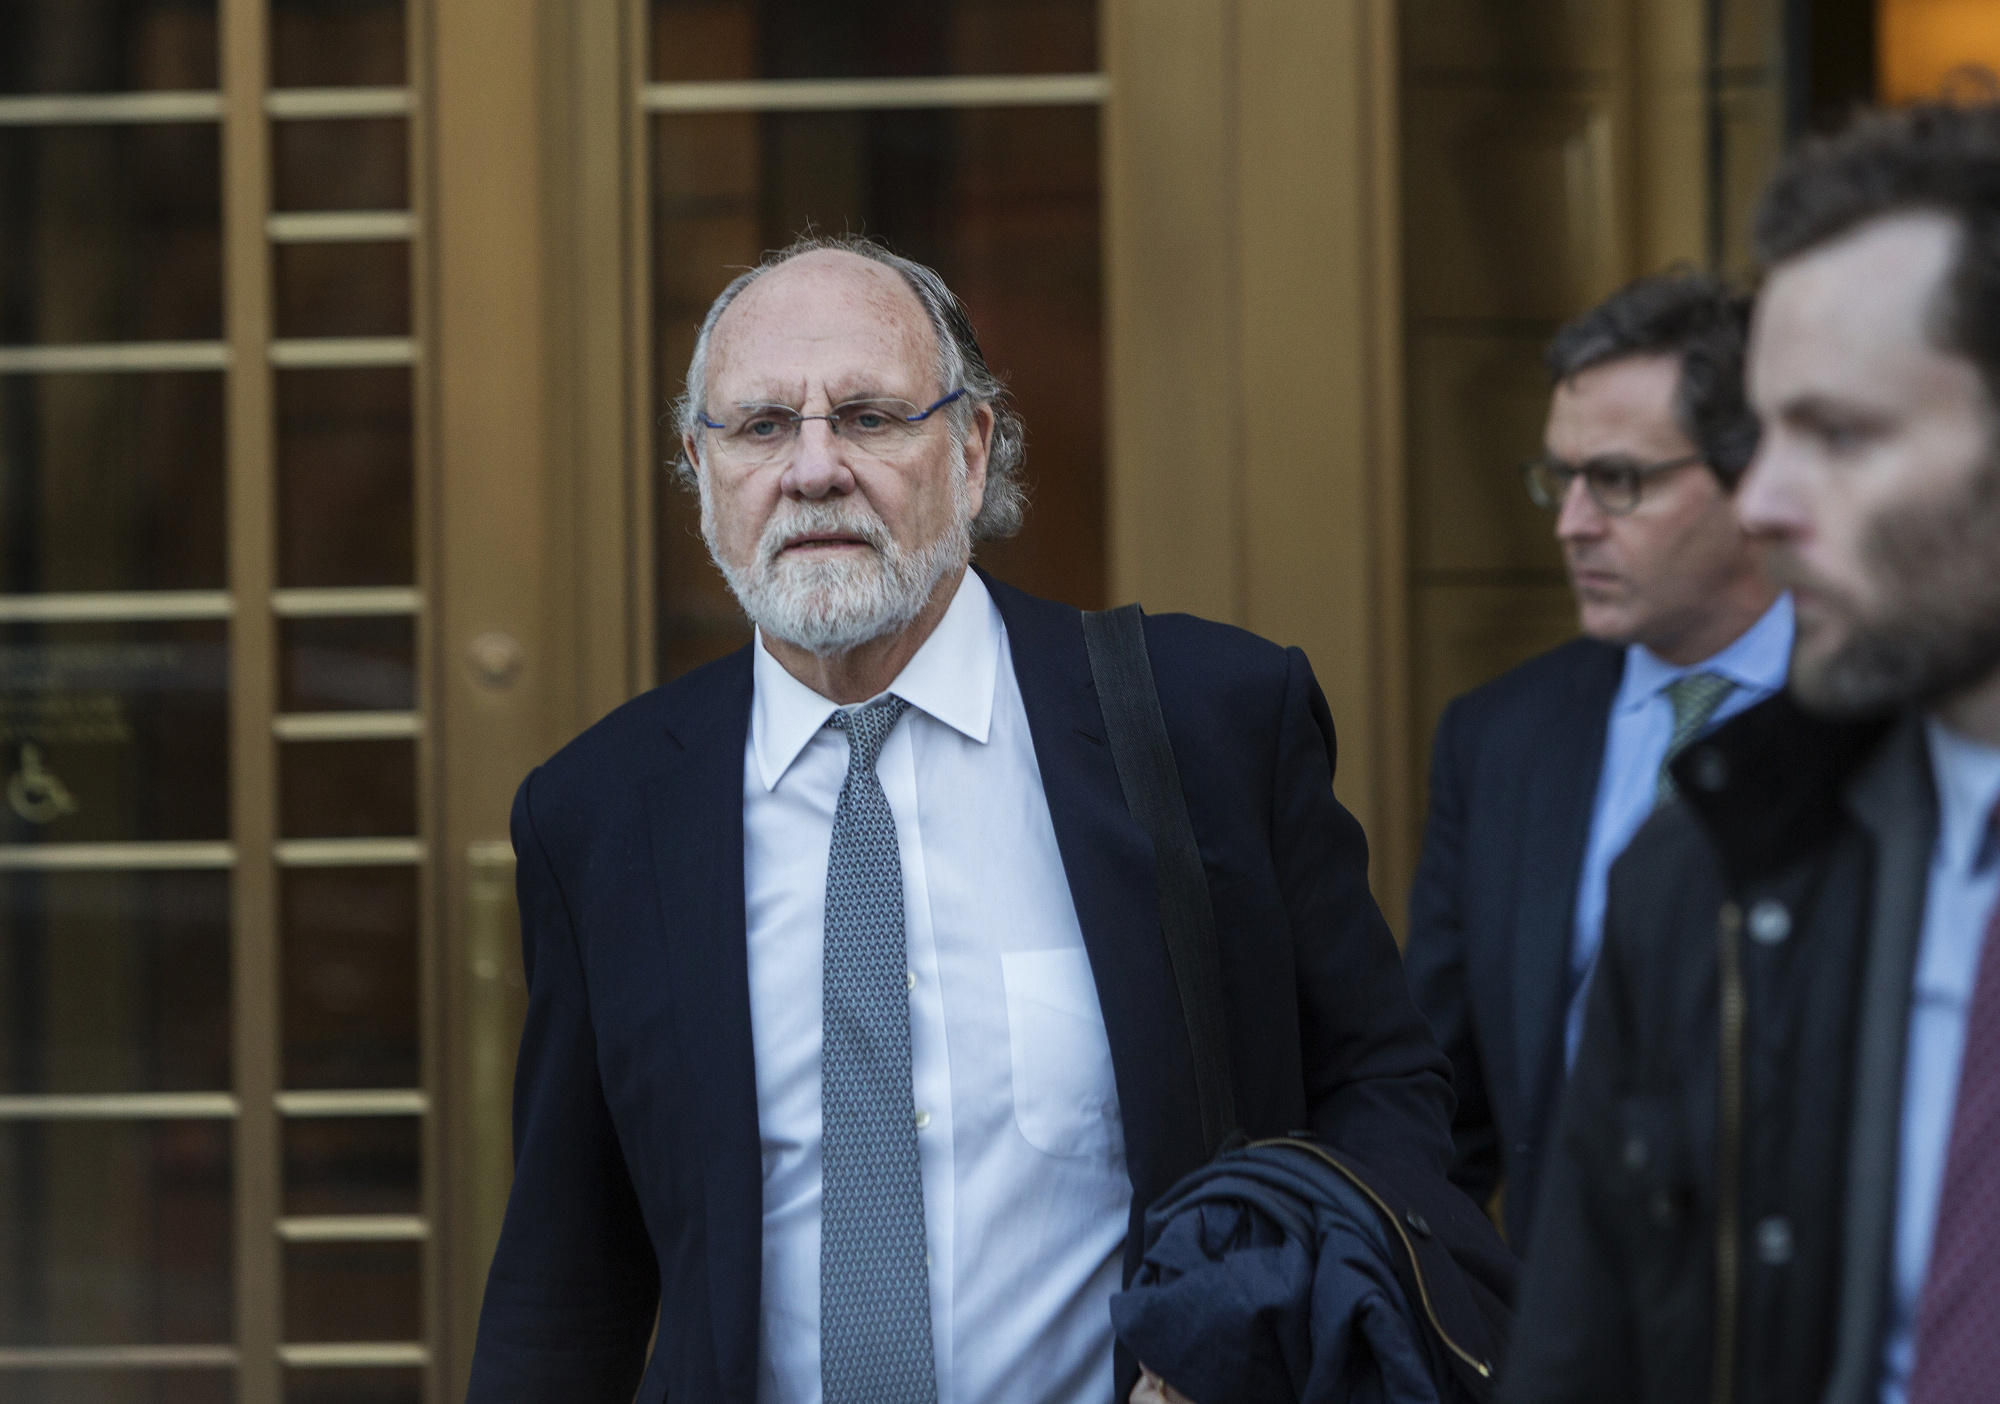 Jon Corzine exits district court in New York on March 9, 2017.